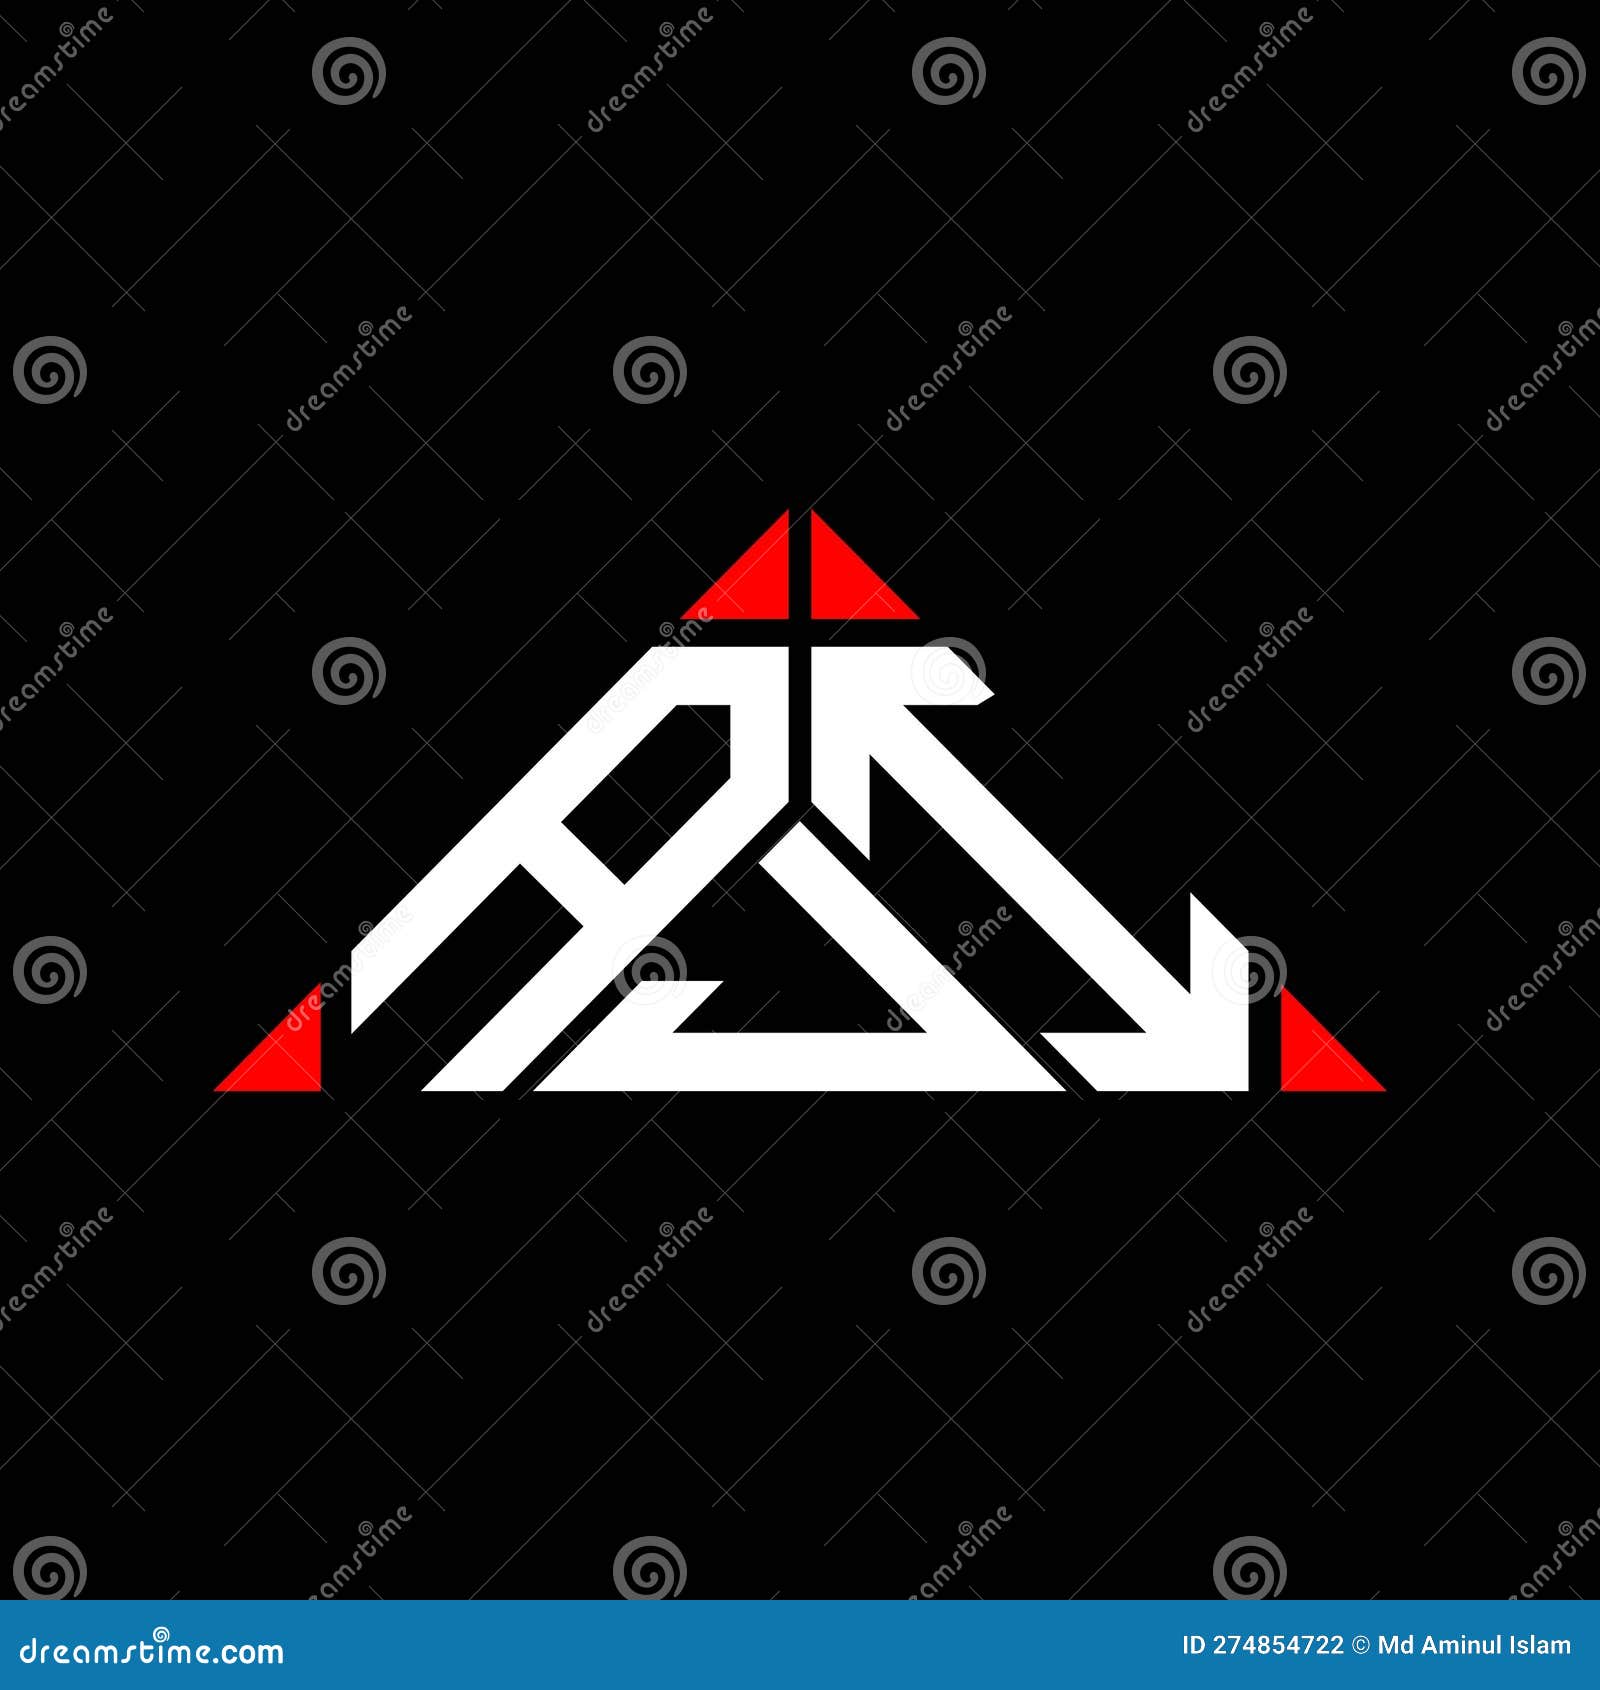 AJI Letter Logo Creative Design with Vector Graphic, AJI Stock Vector ...